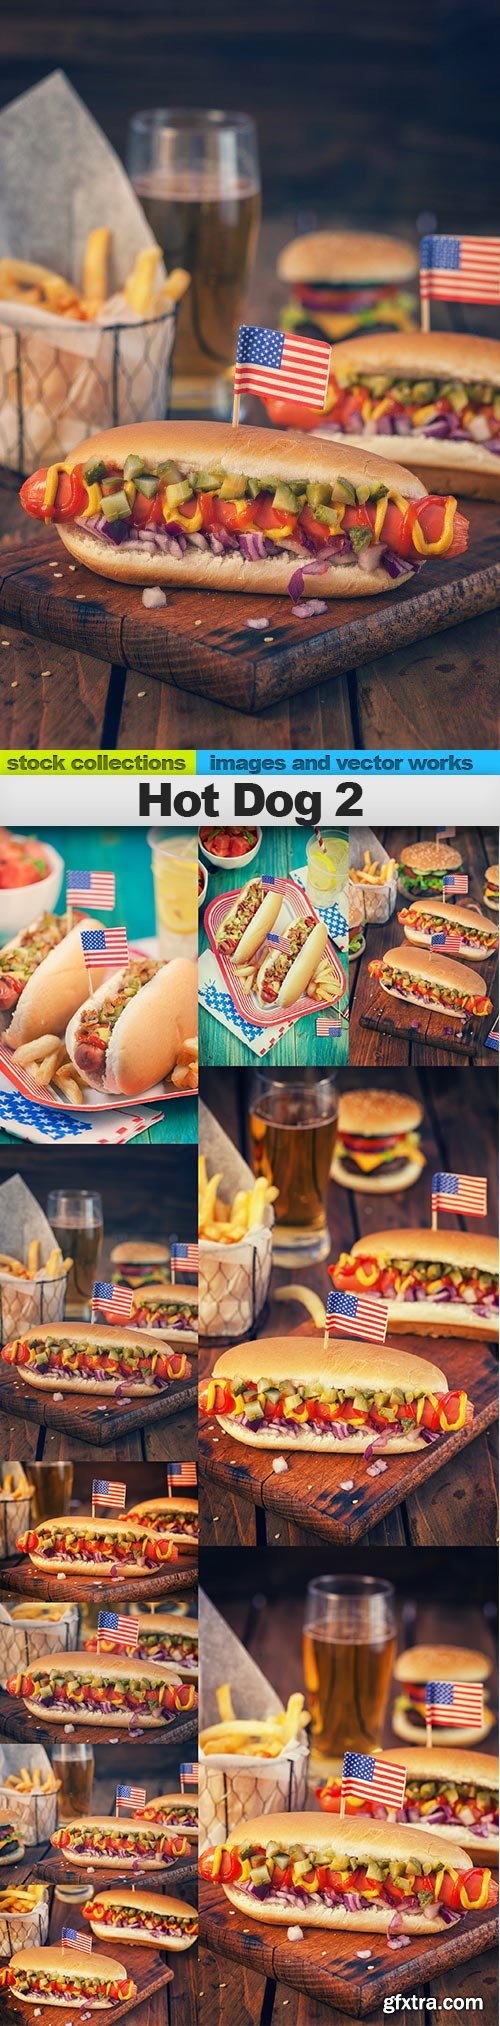 Hot Dog 2, 10 x UHQ JPEG